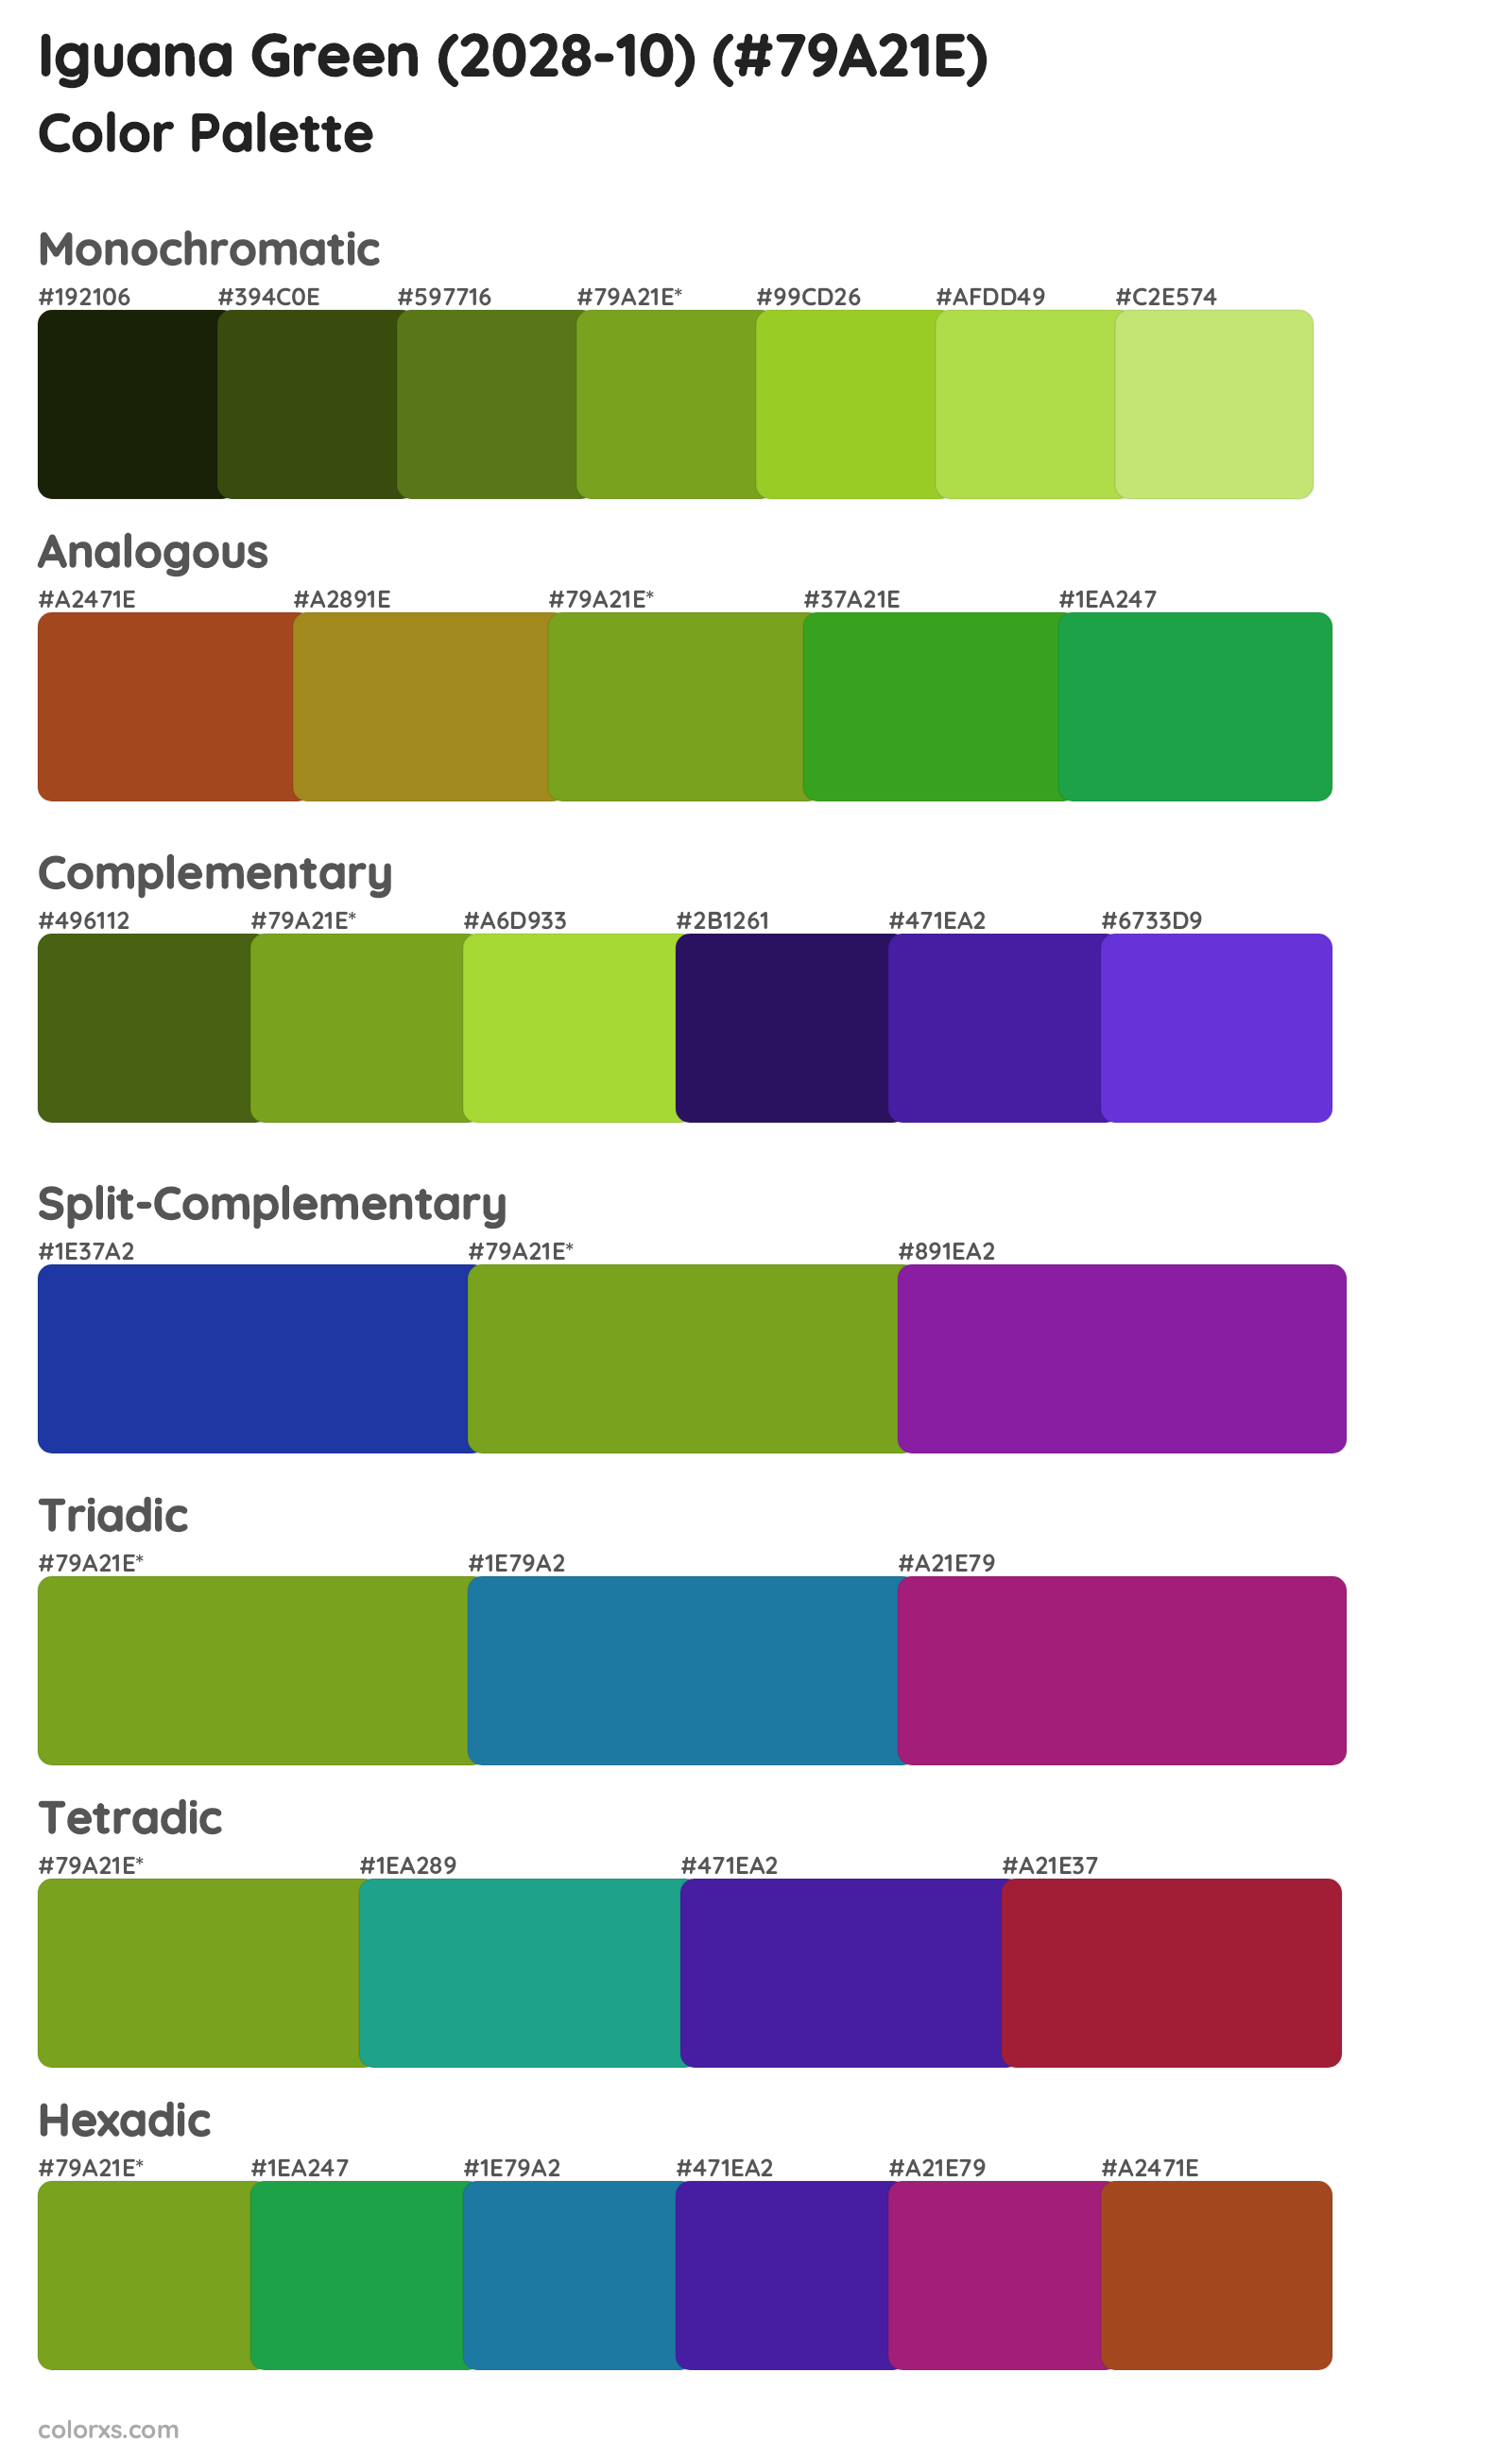 Iguana Green (2028-10) Color Scheme Palettes